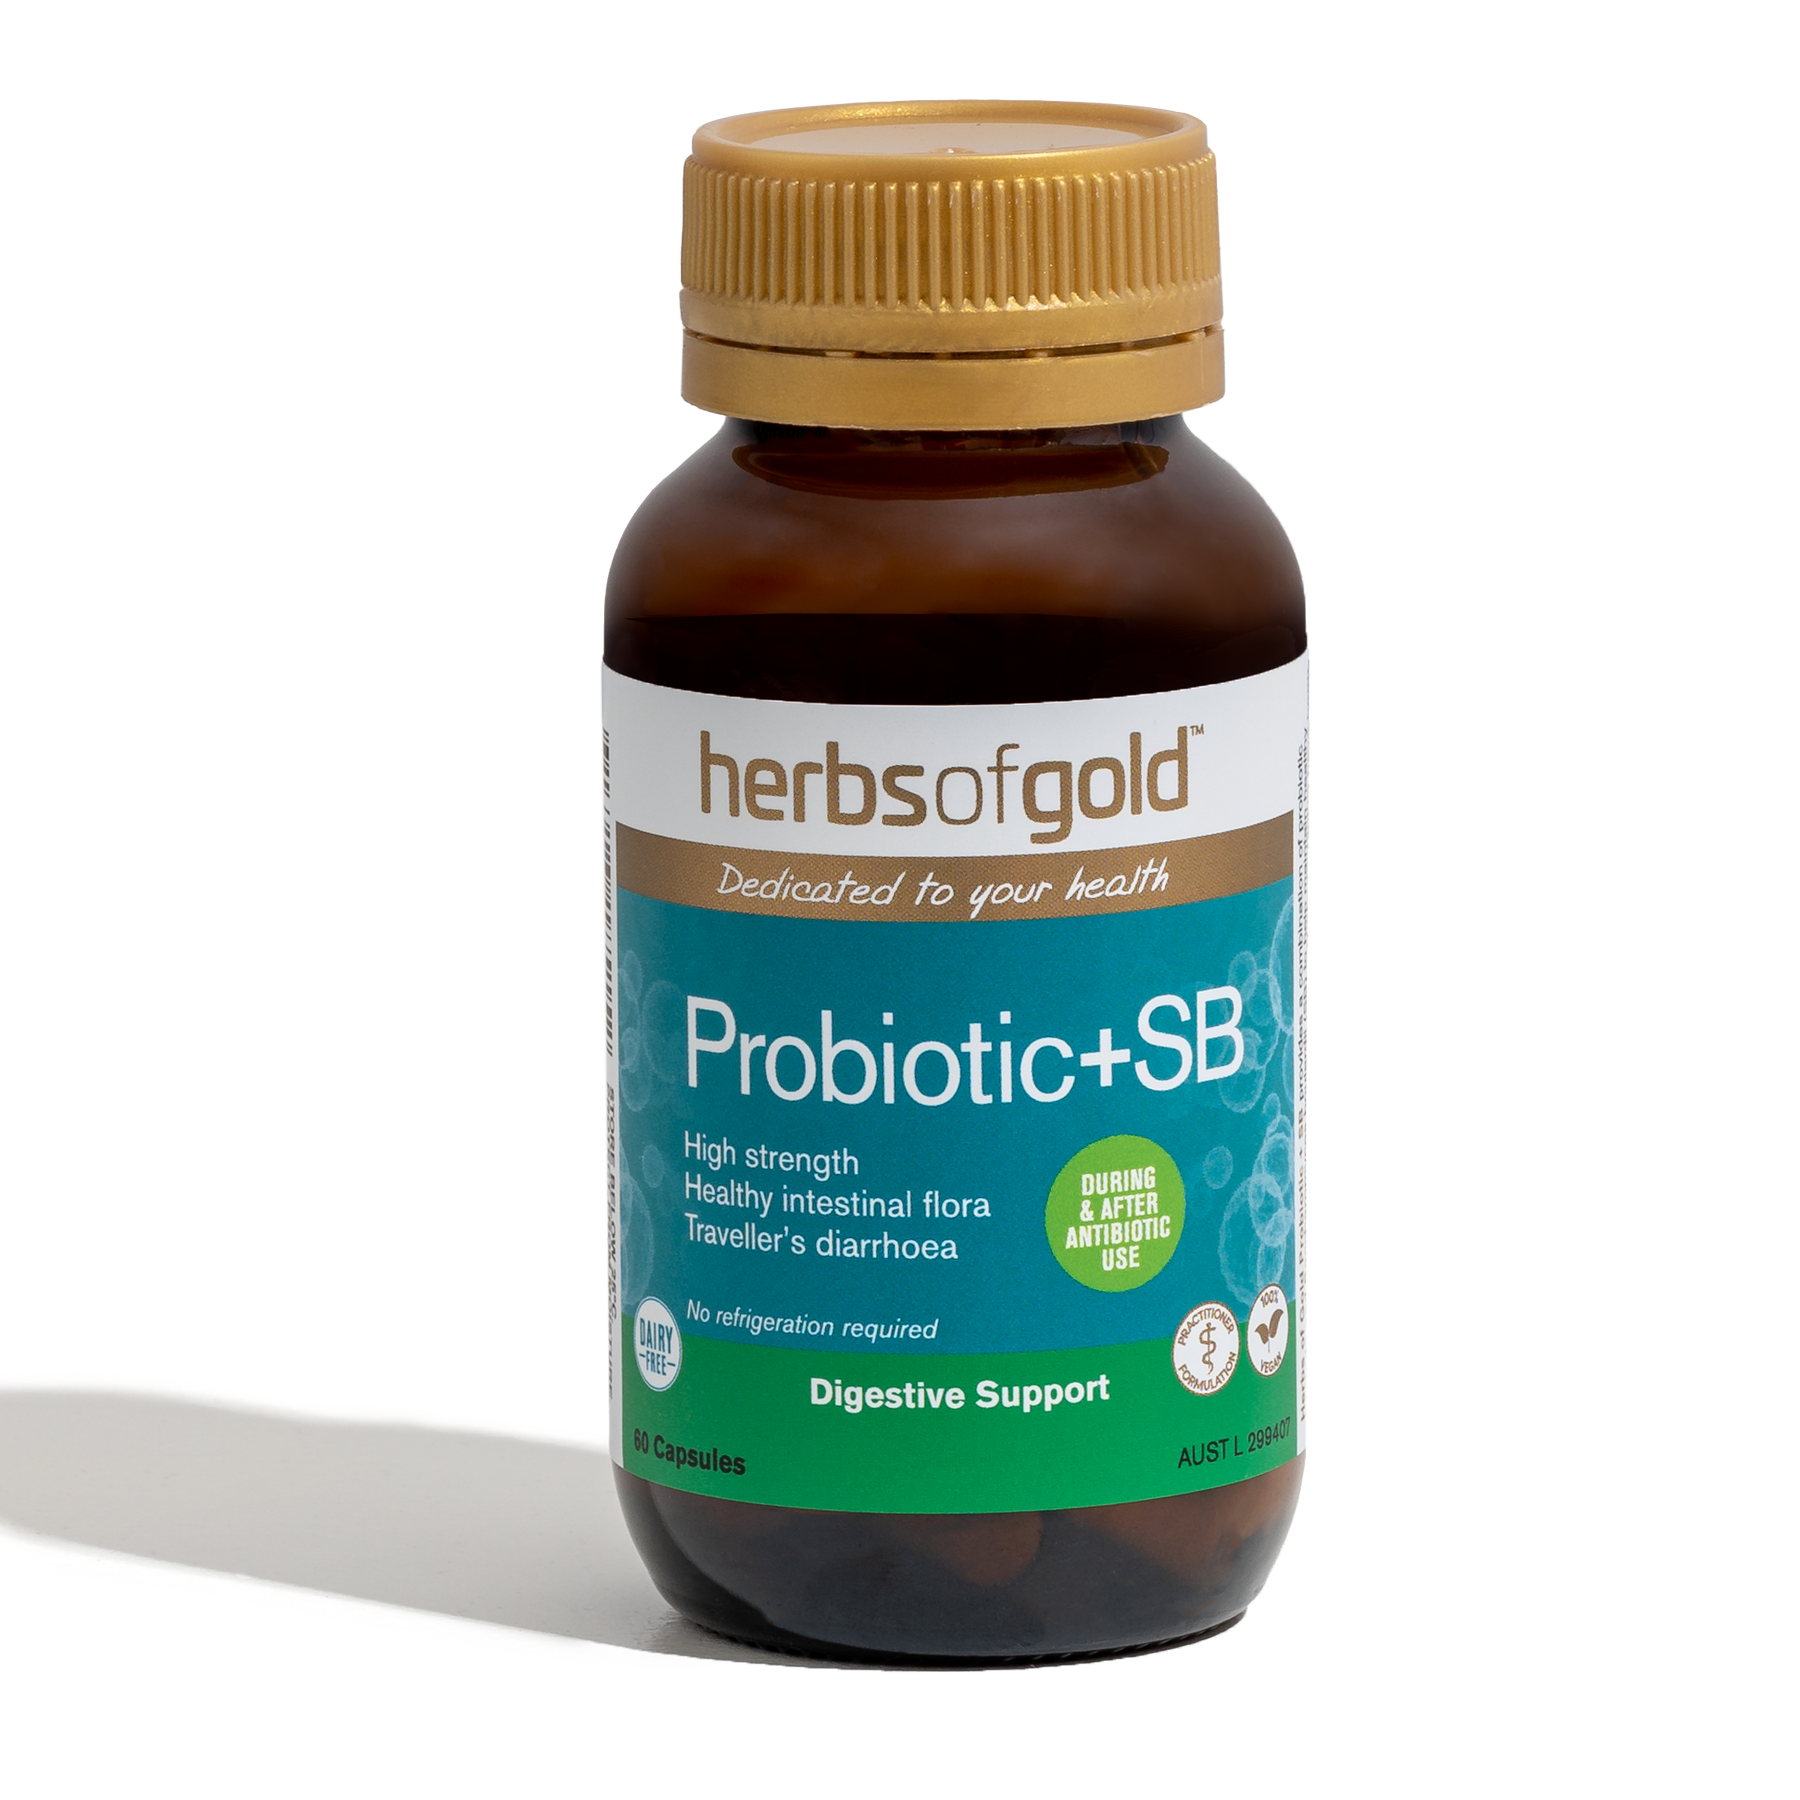 Probiotic + SB